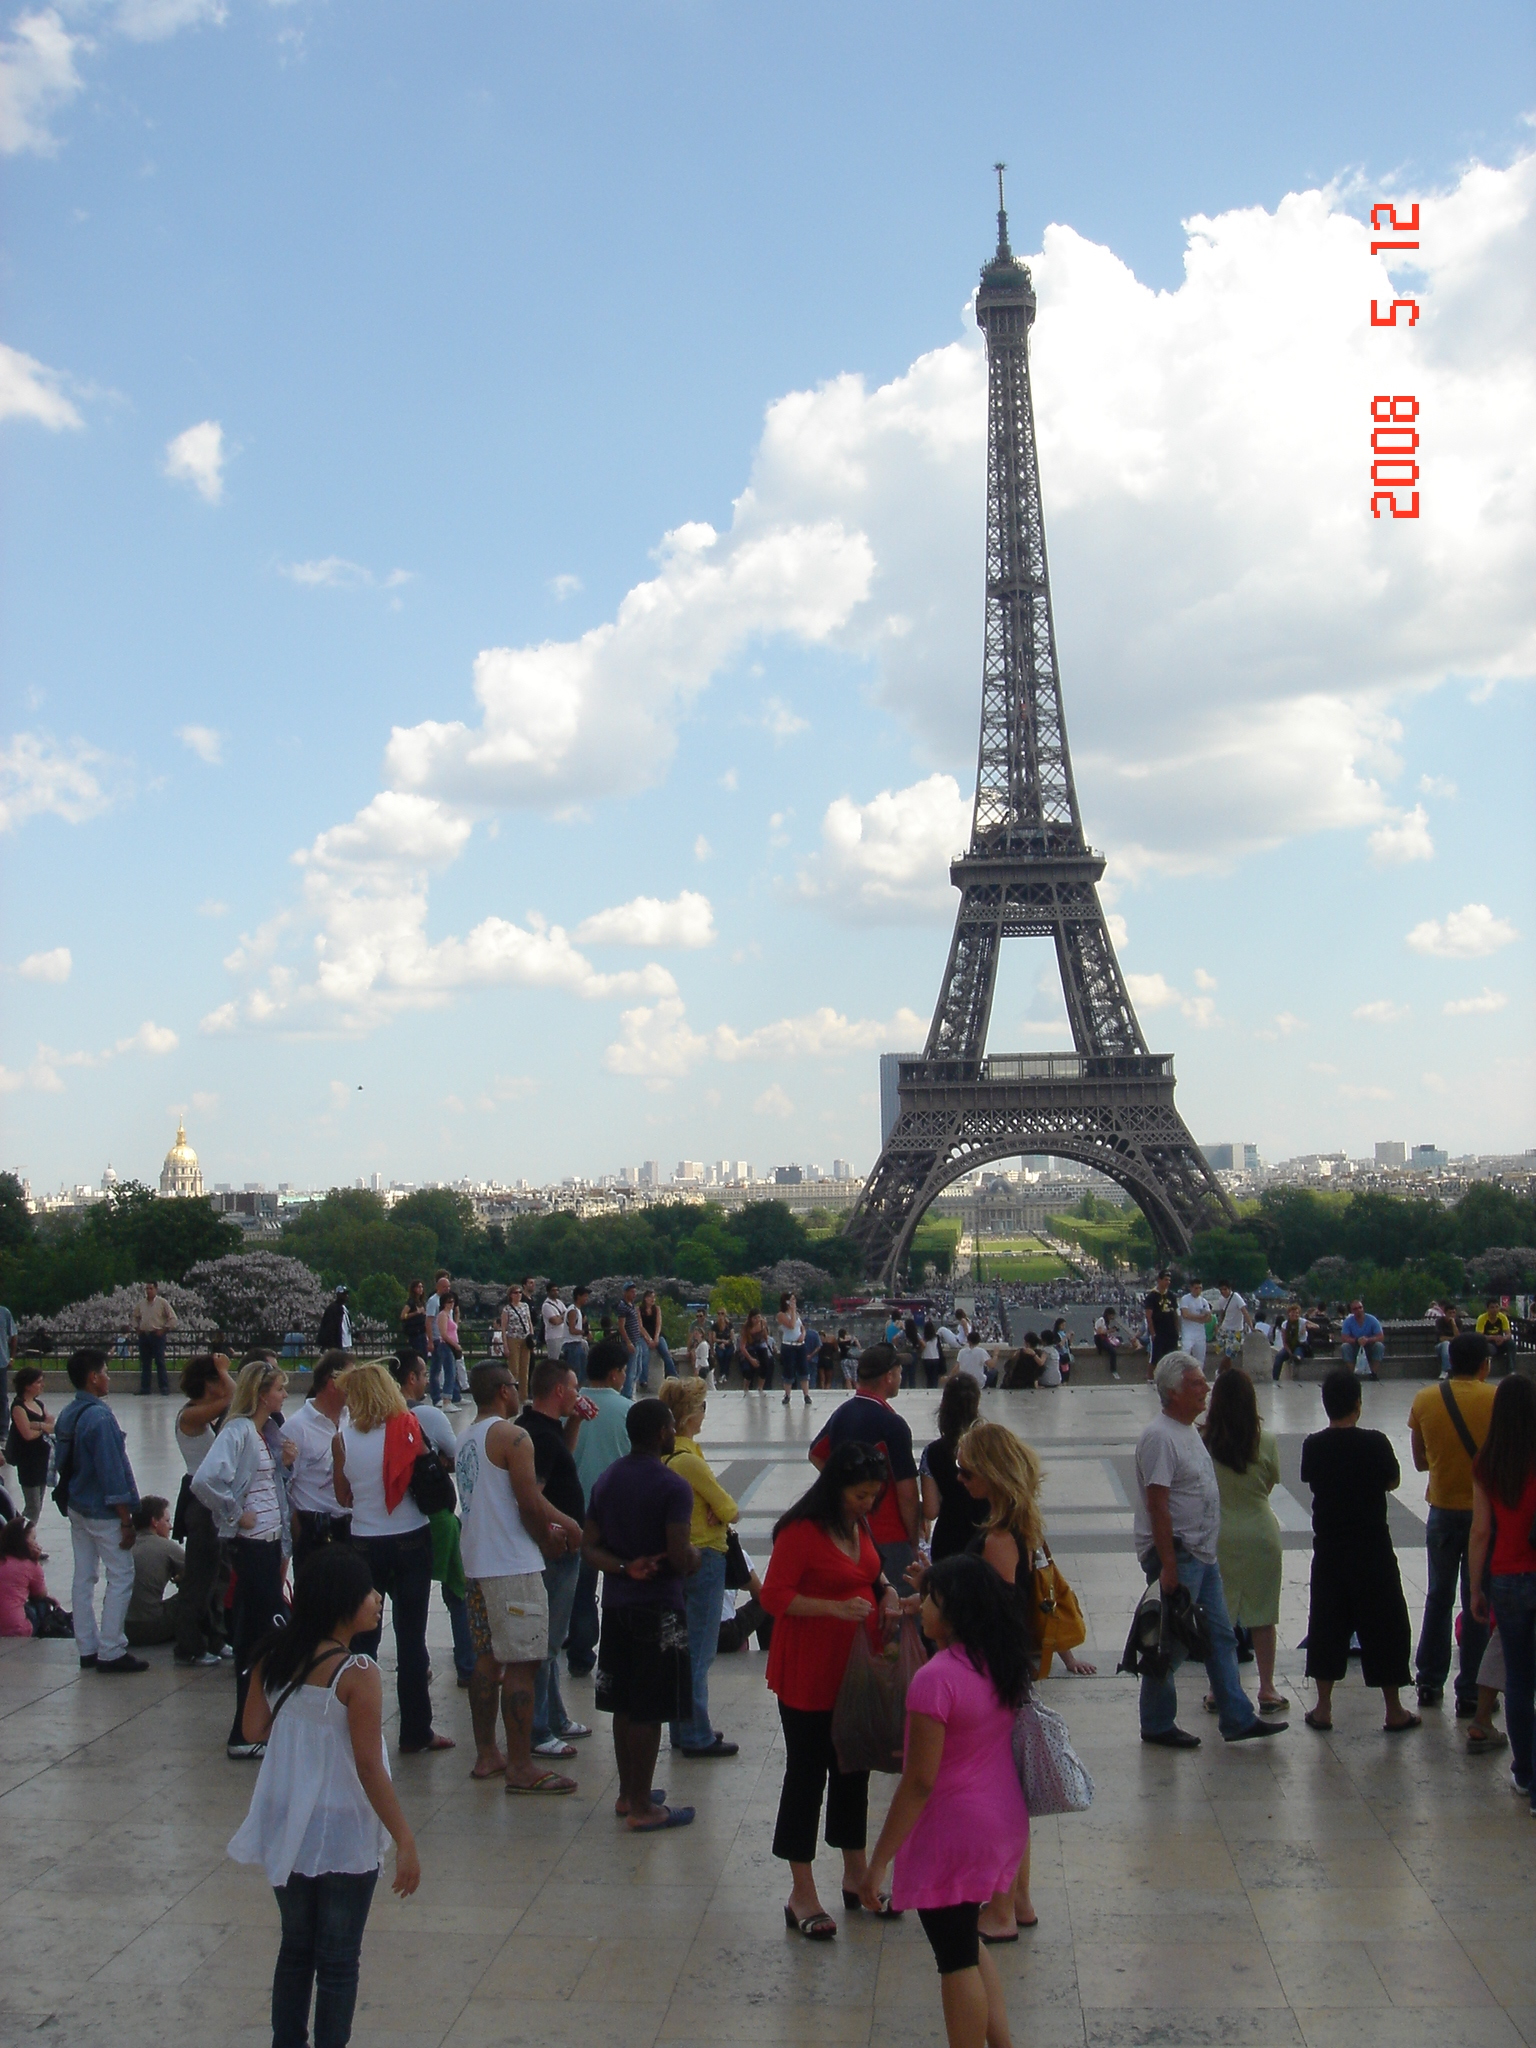 Paris_Trocadéro & Eiffel Tower - GamesforLanguage